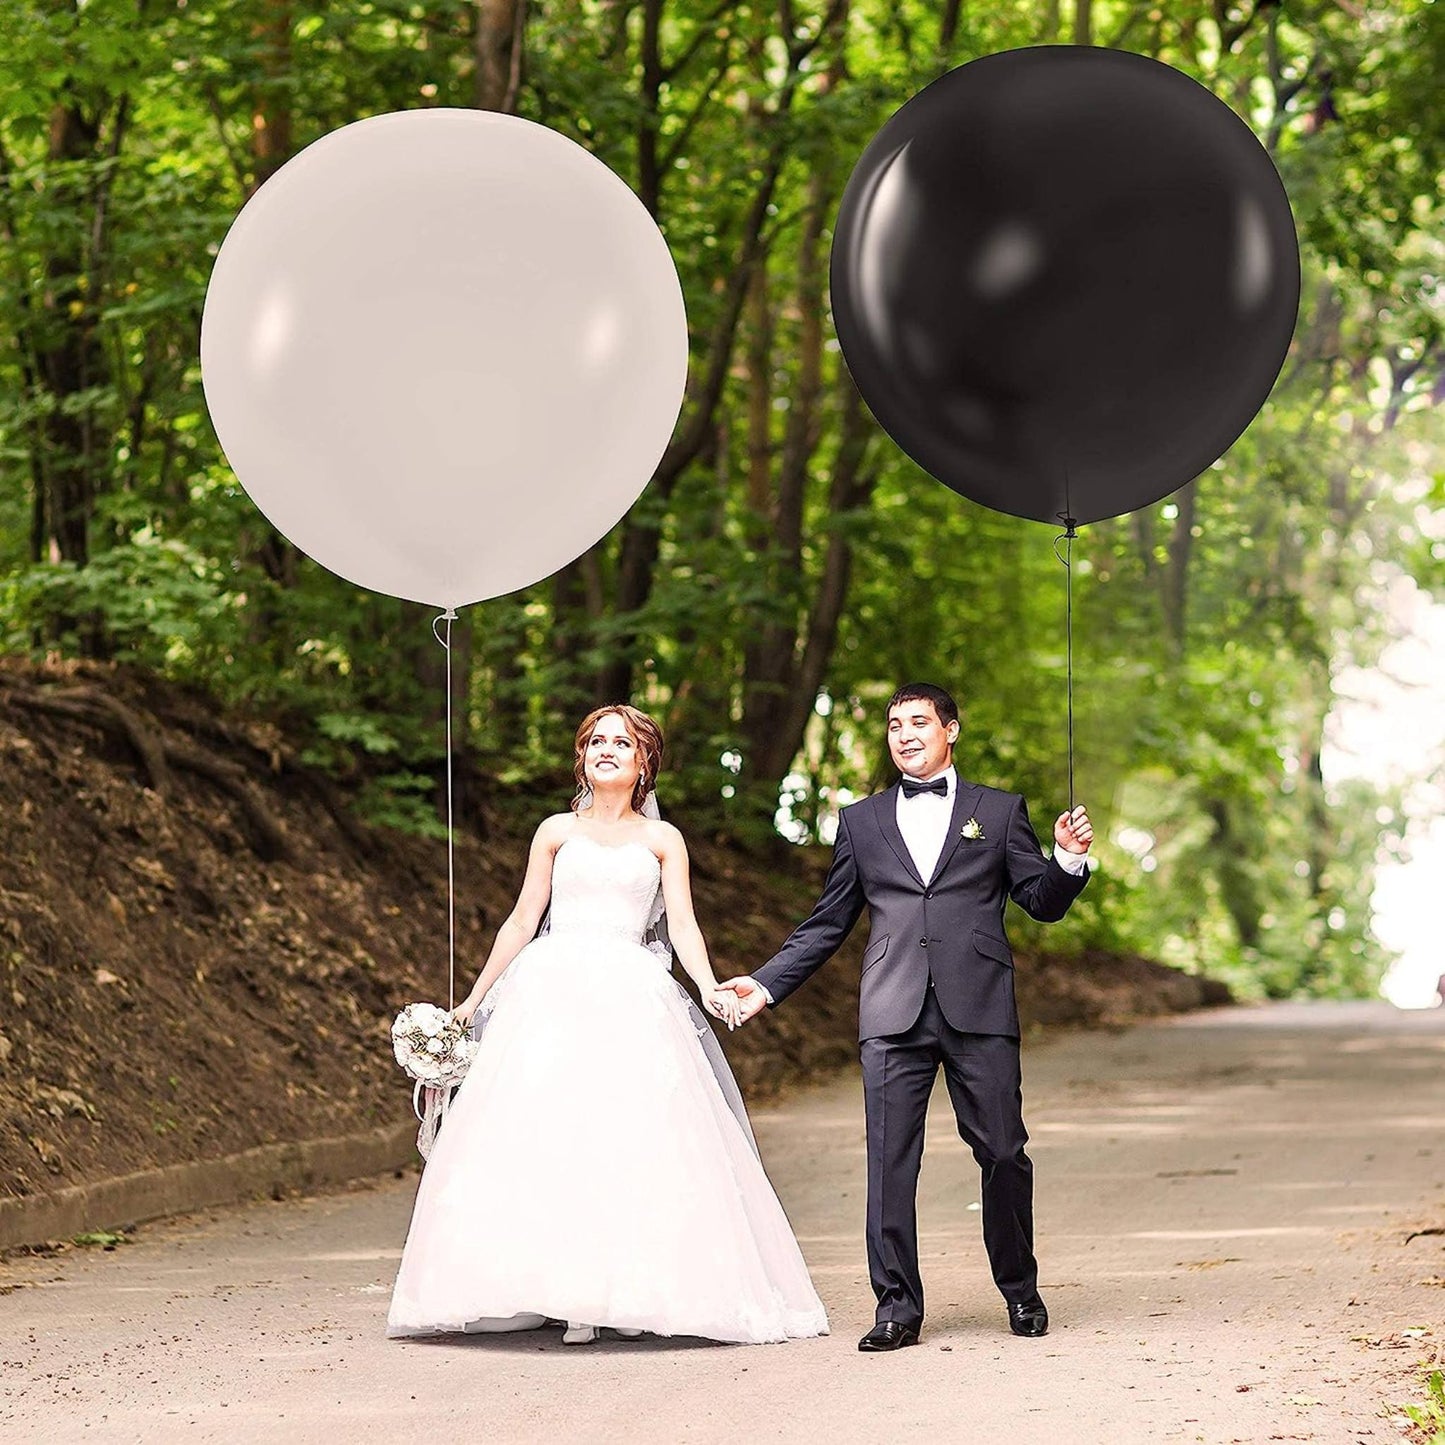 36” Cool Black Helium Jumbo Latex Balloon